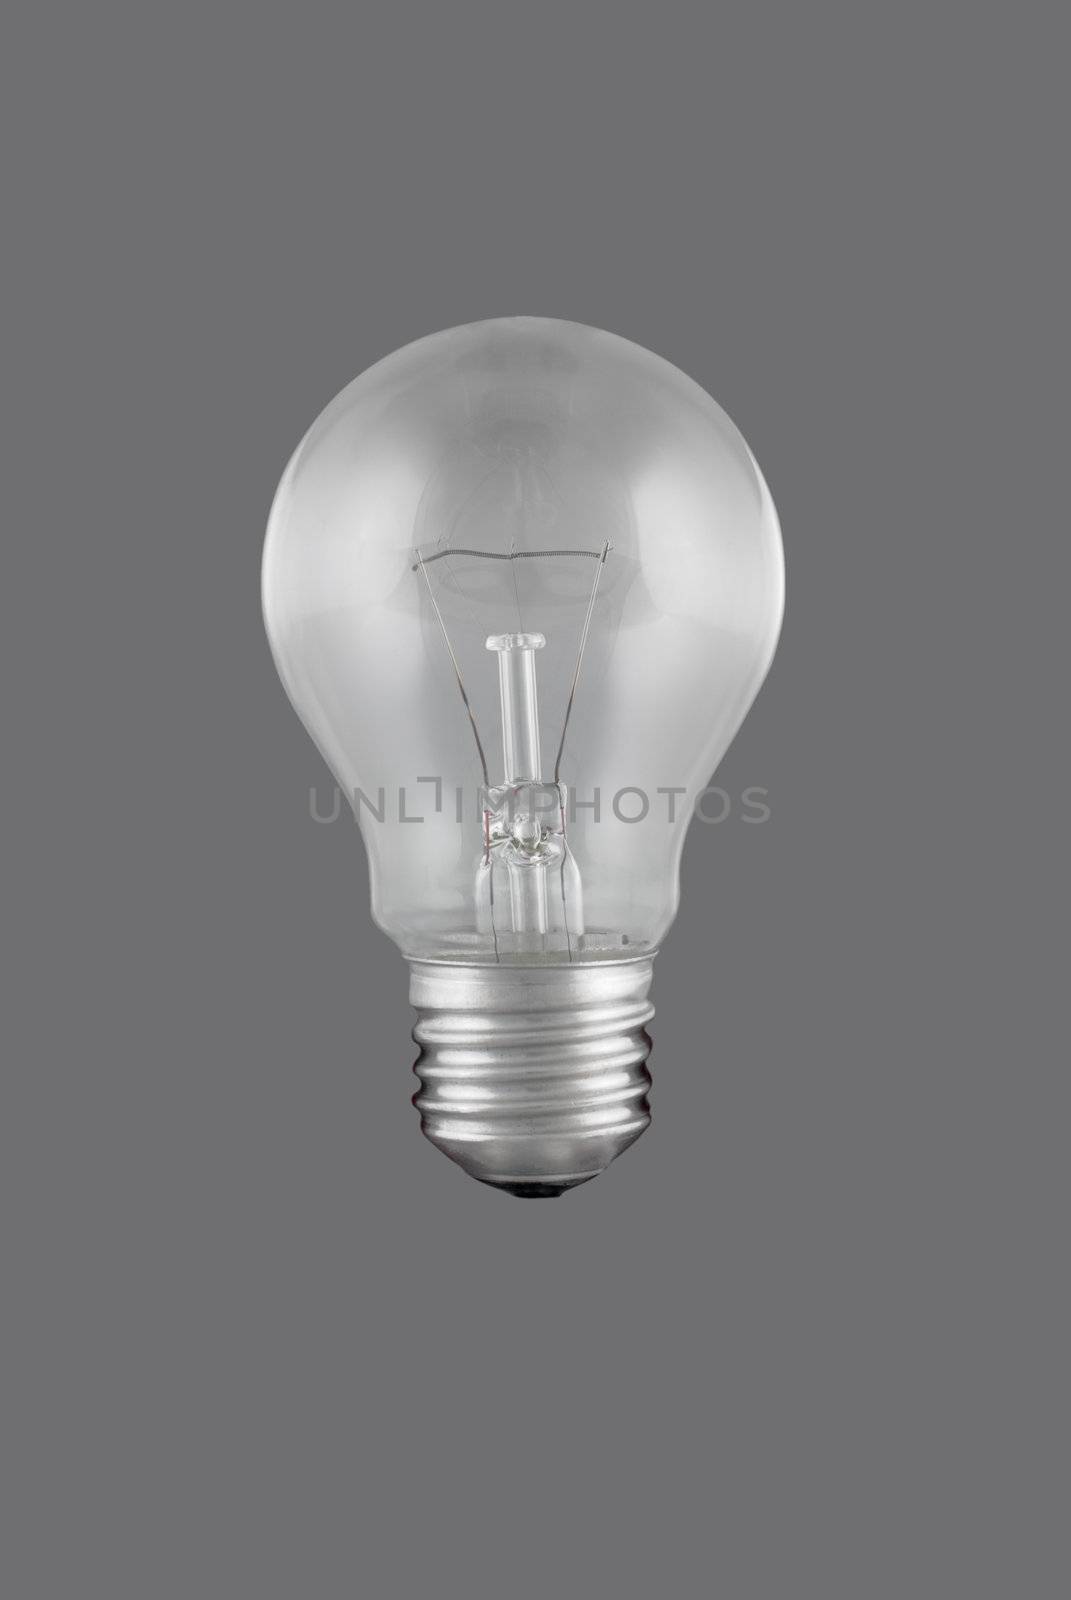 Light bulb by homydesign